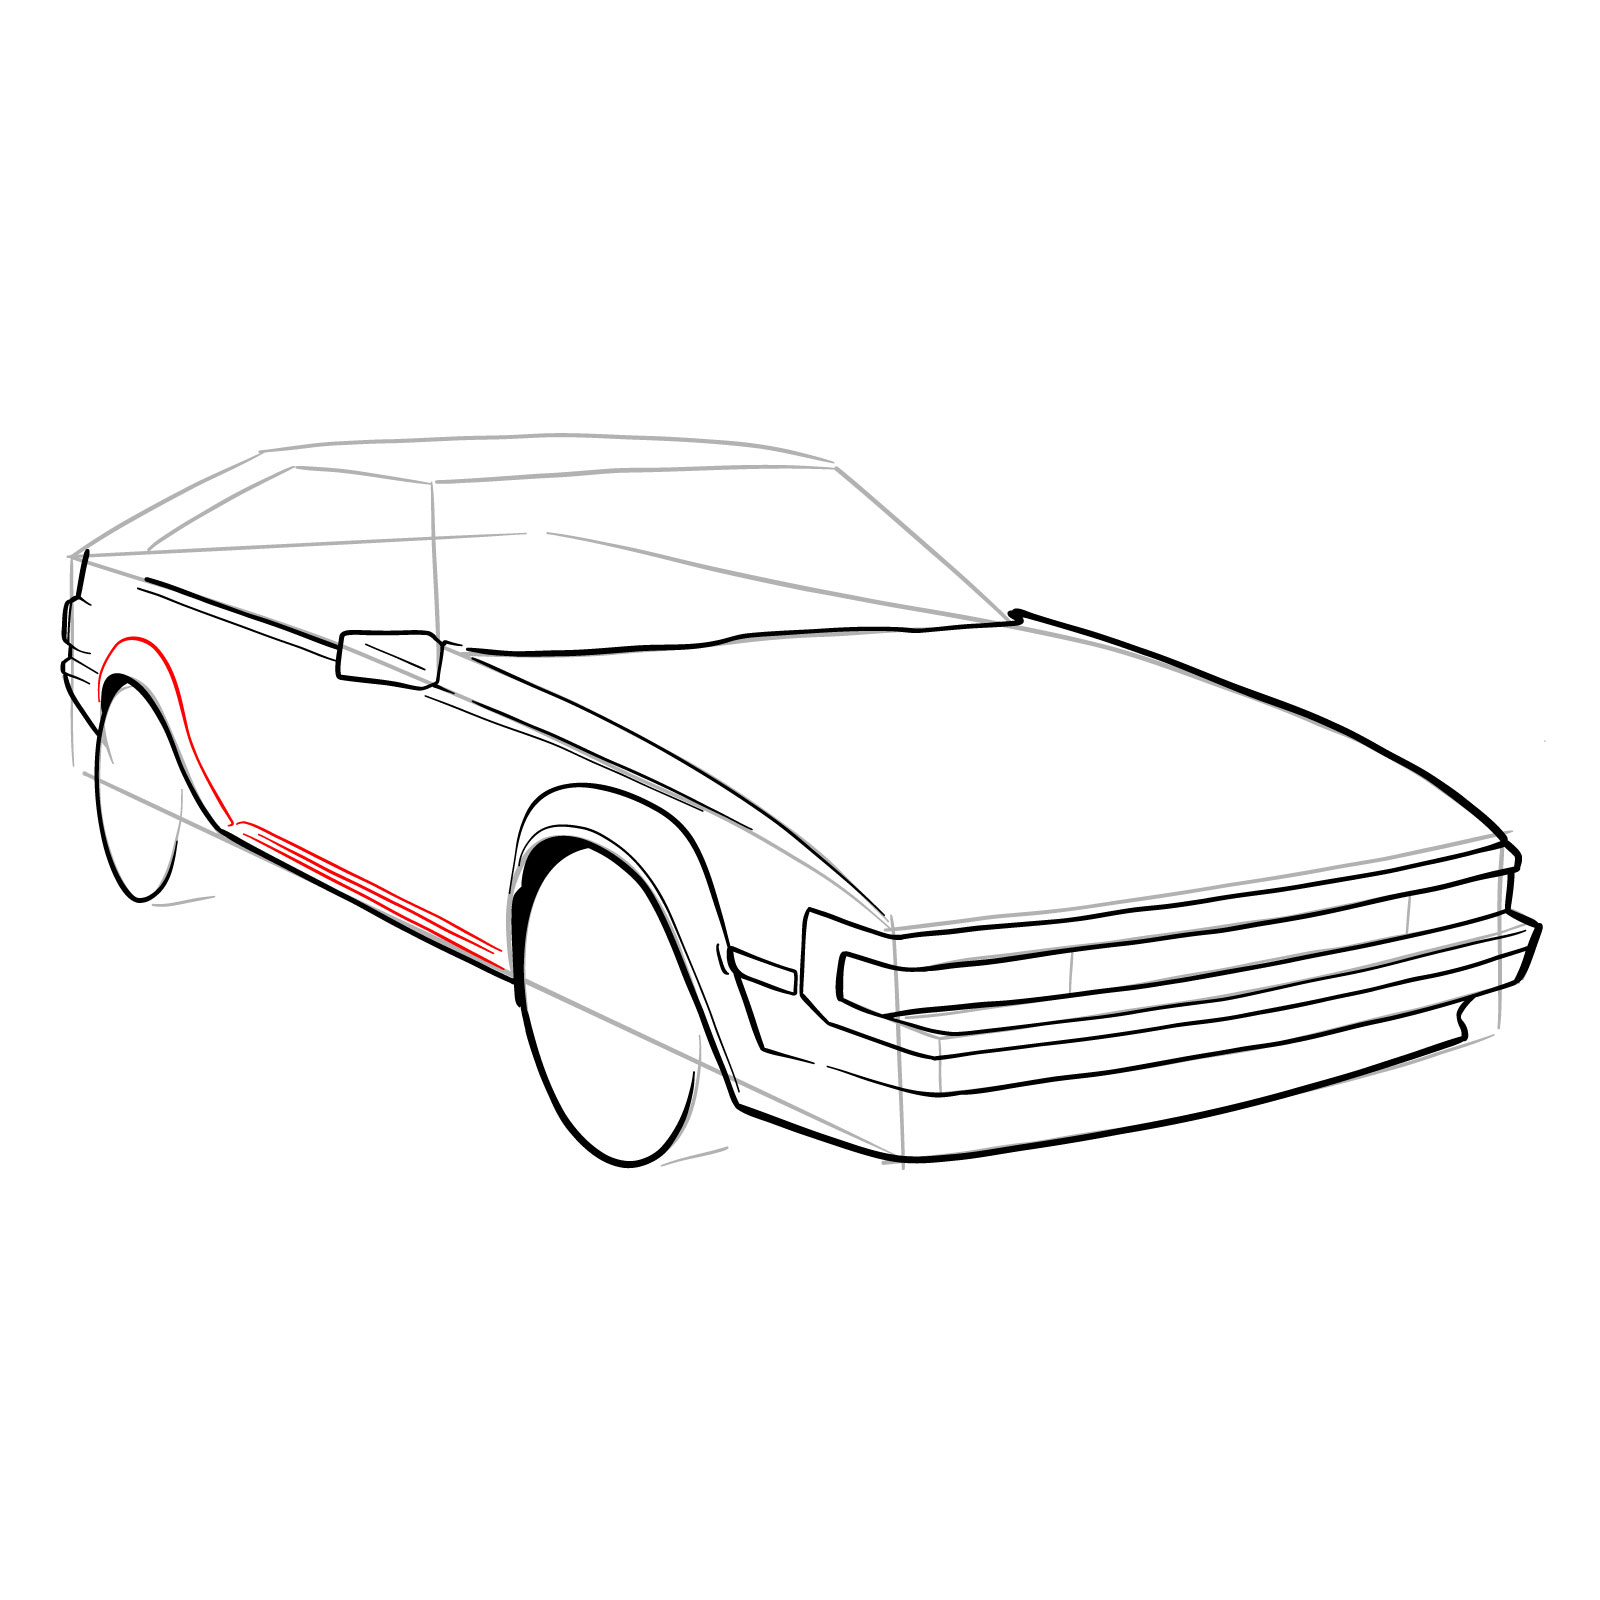 How to draw a 1985 Toyota Celica Supra P Type MK 2 - step 19